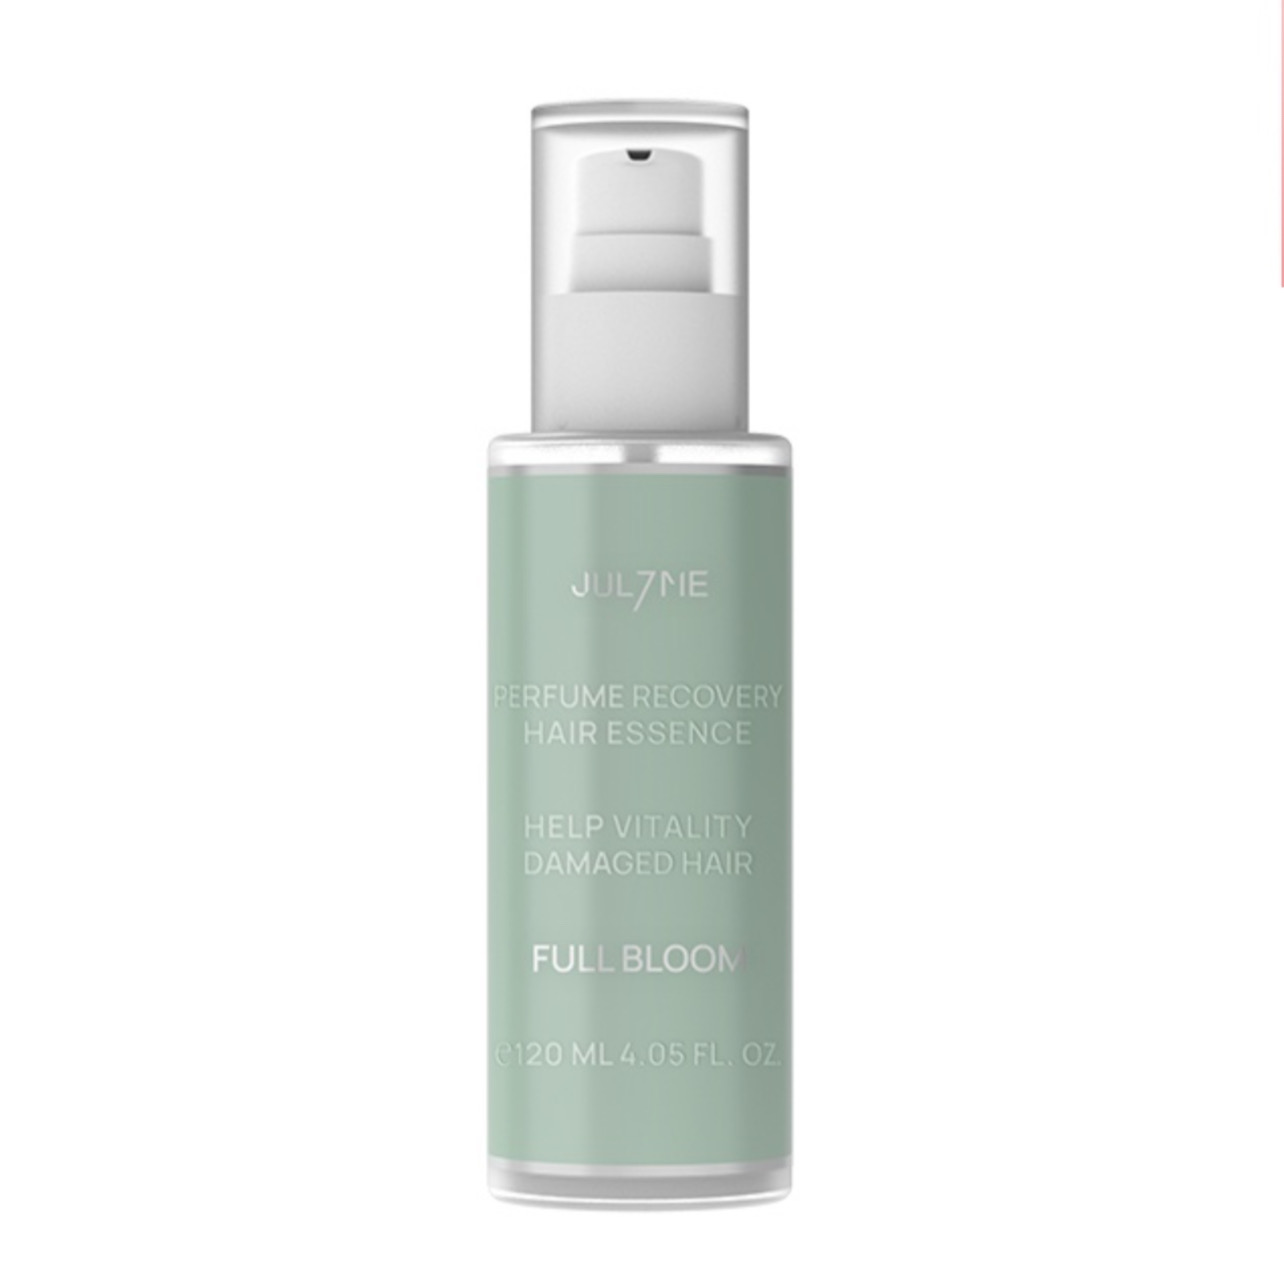 JULYME Perfume Recovery Hair Essence - 120ml -Full Bloom